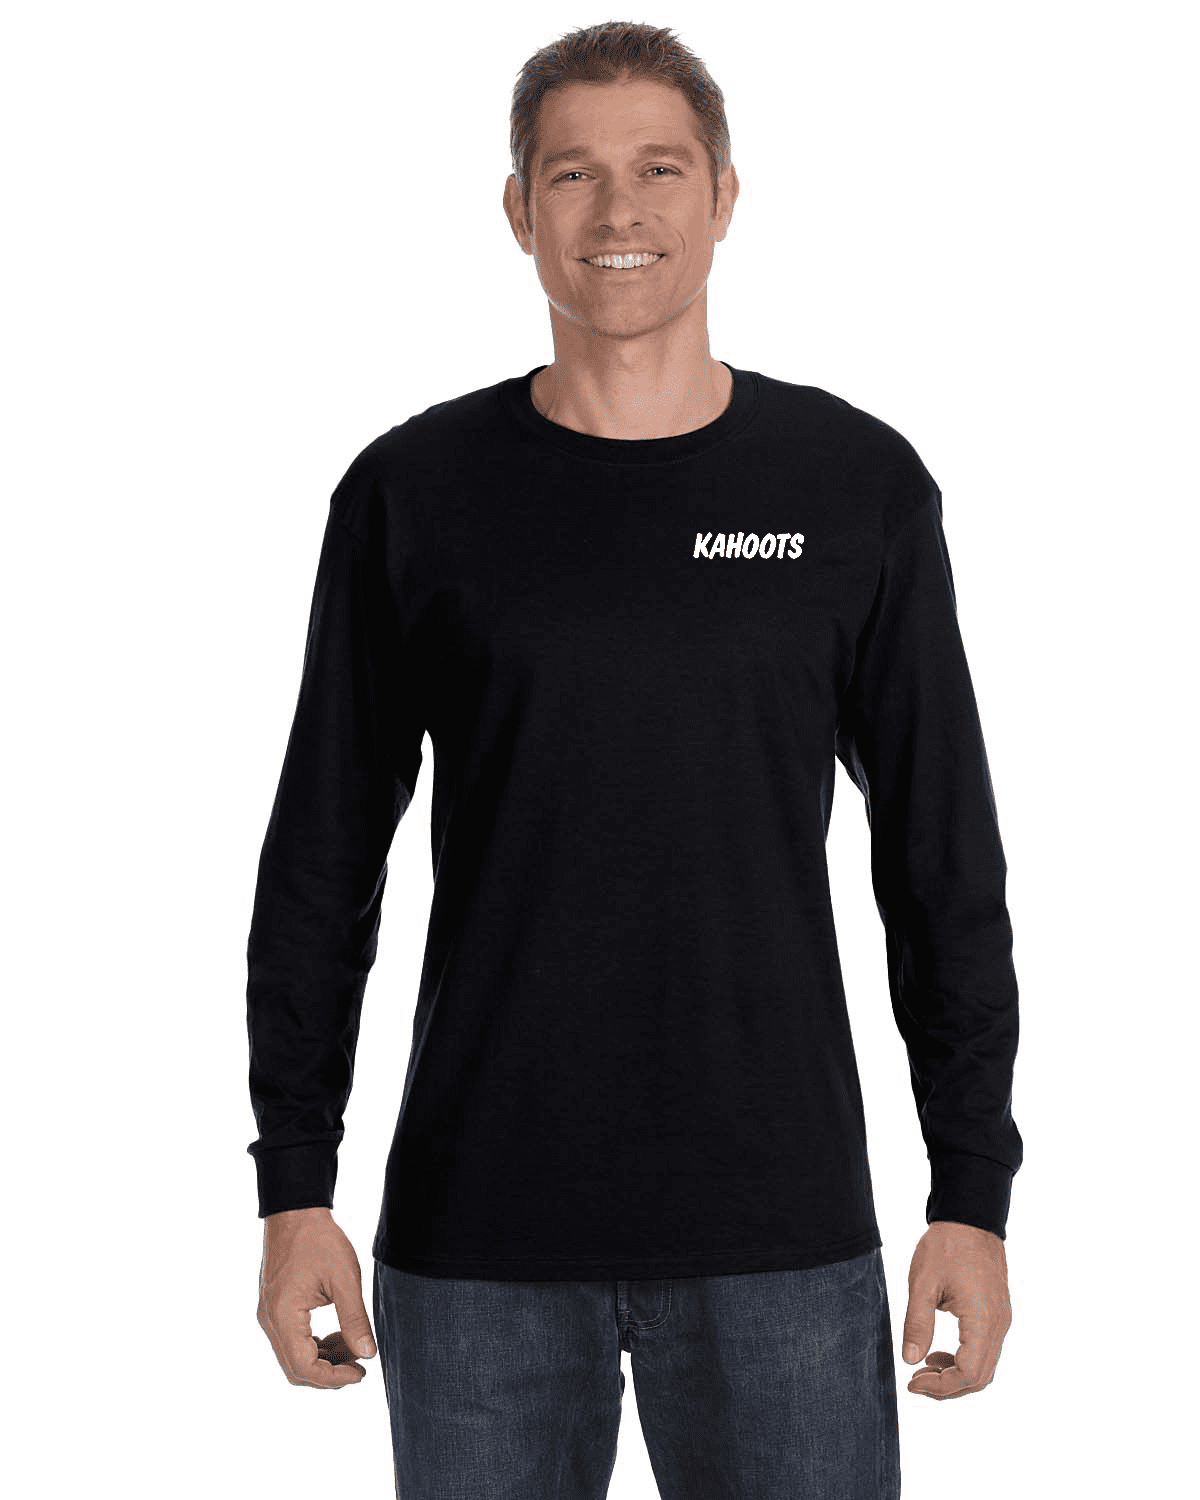 KAHOOTS T-Shirt - Long Sleeve Black (5586)